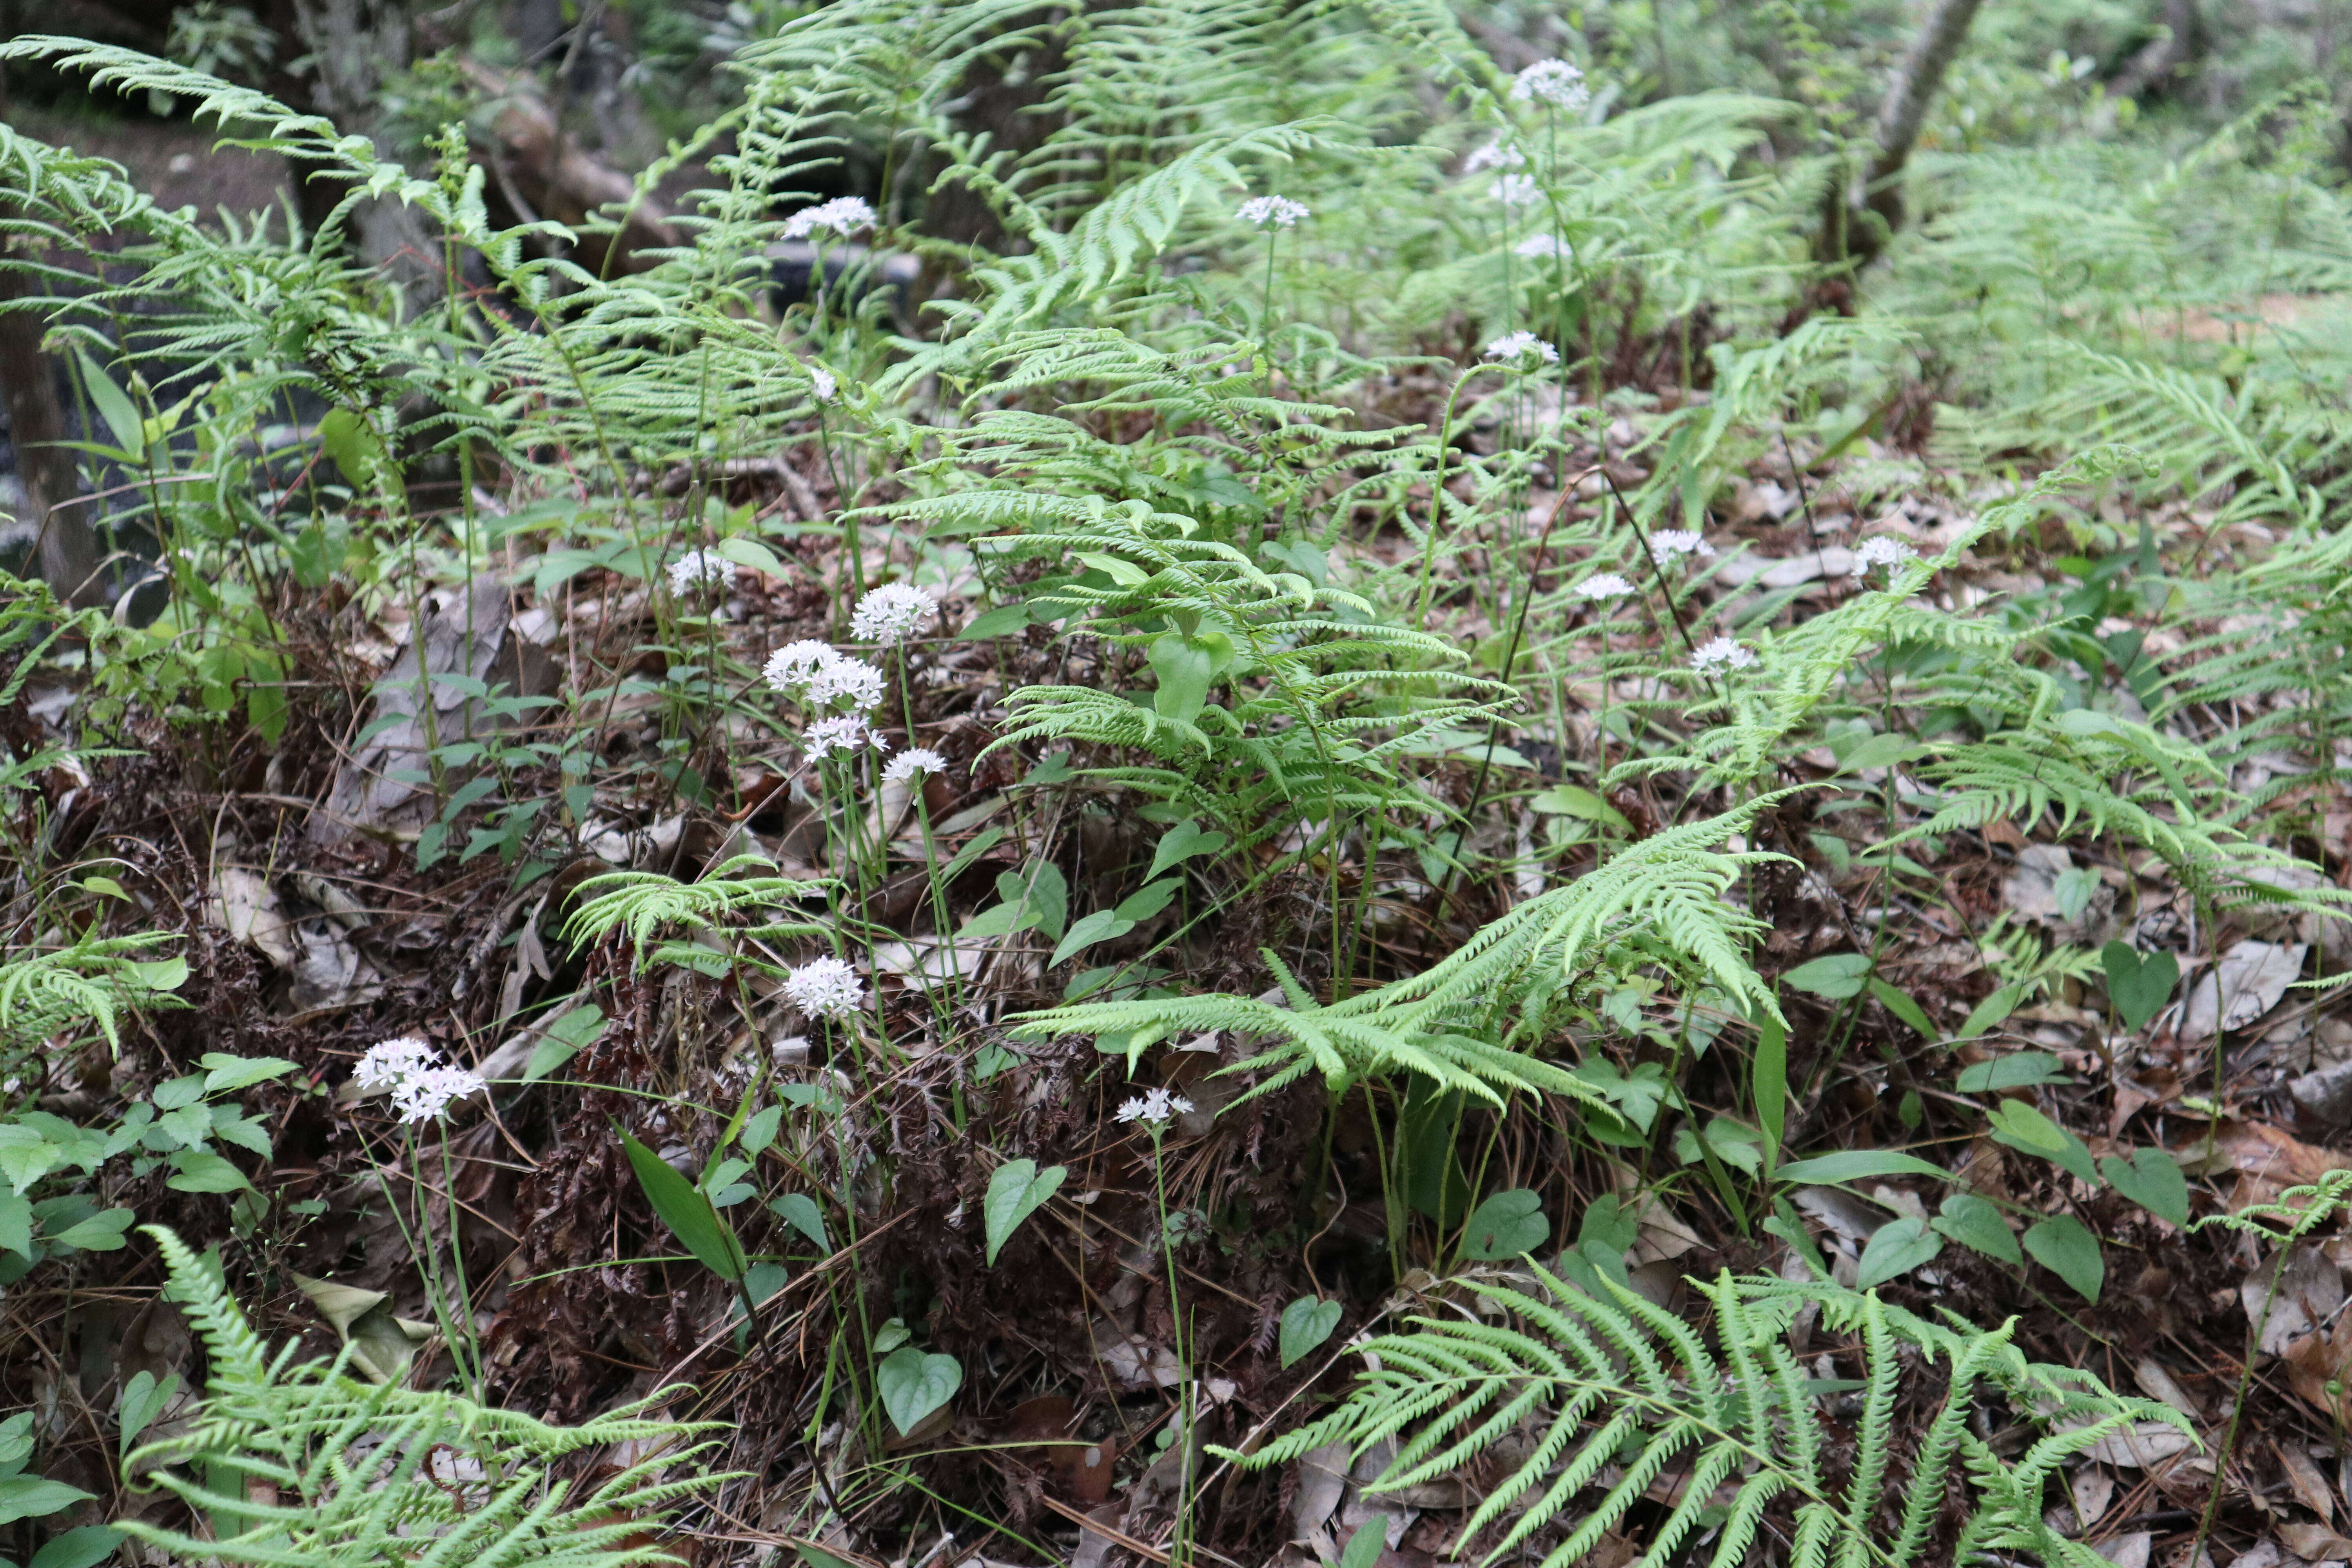 Image de Allium canadense var. mobilense (Regel) Ownbey